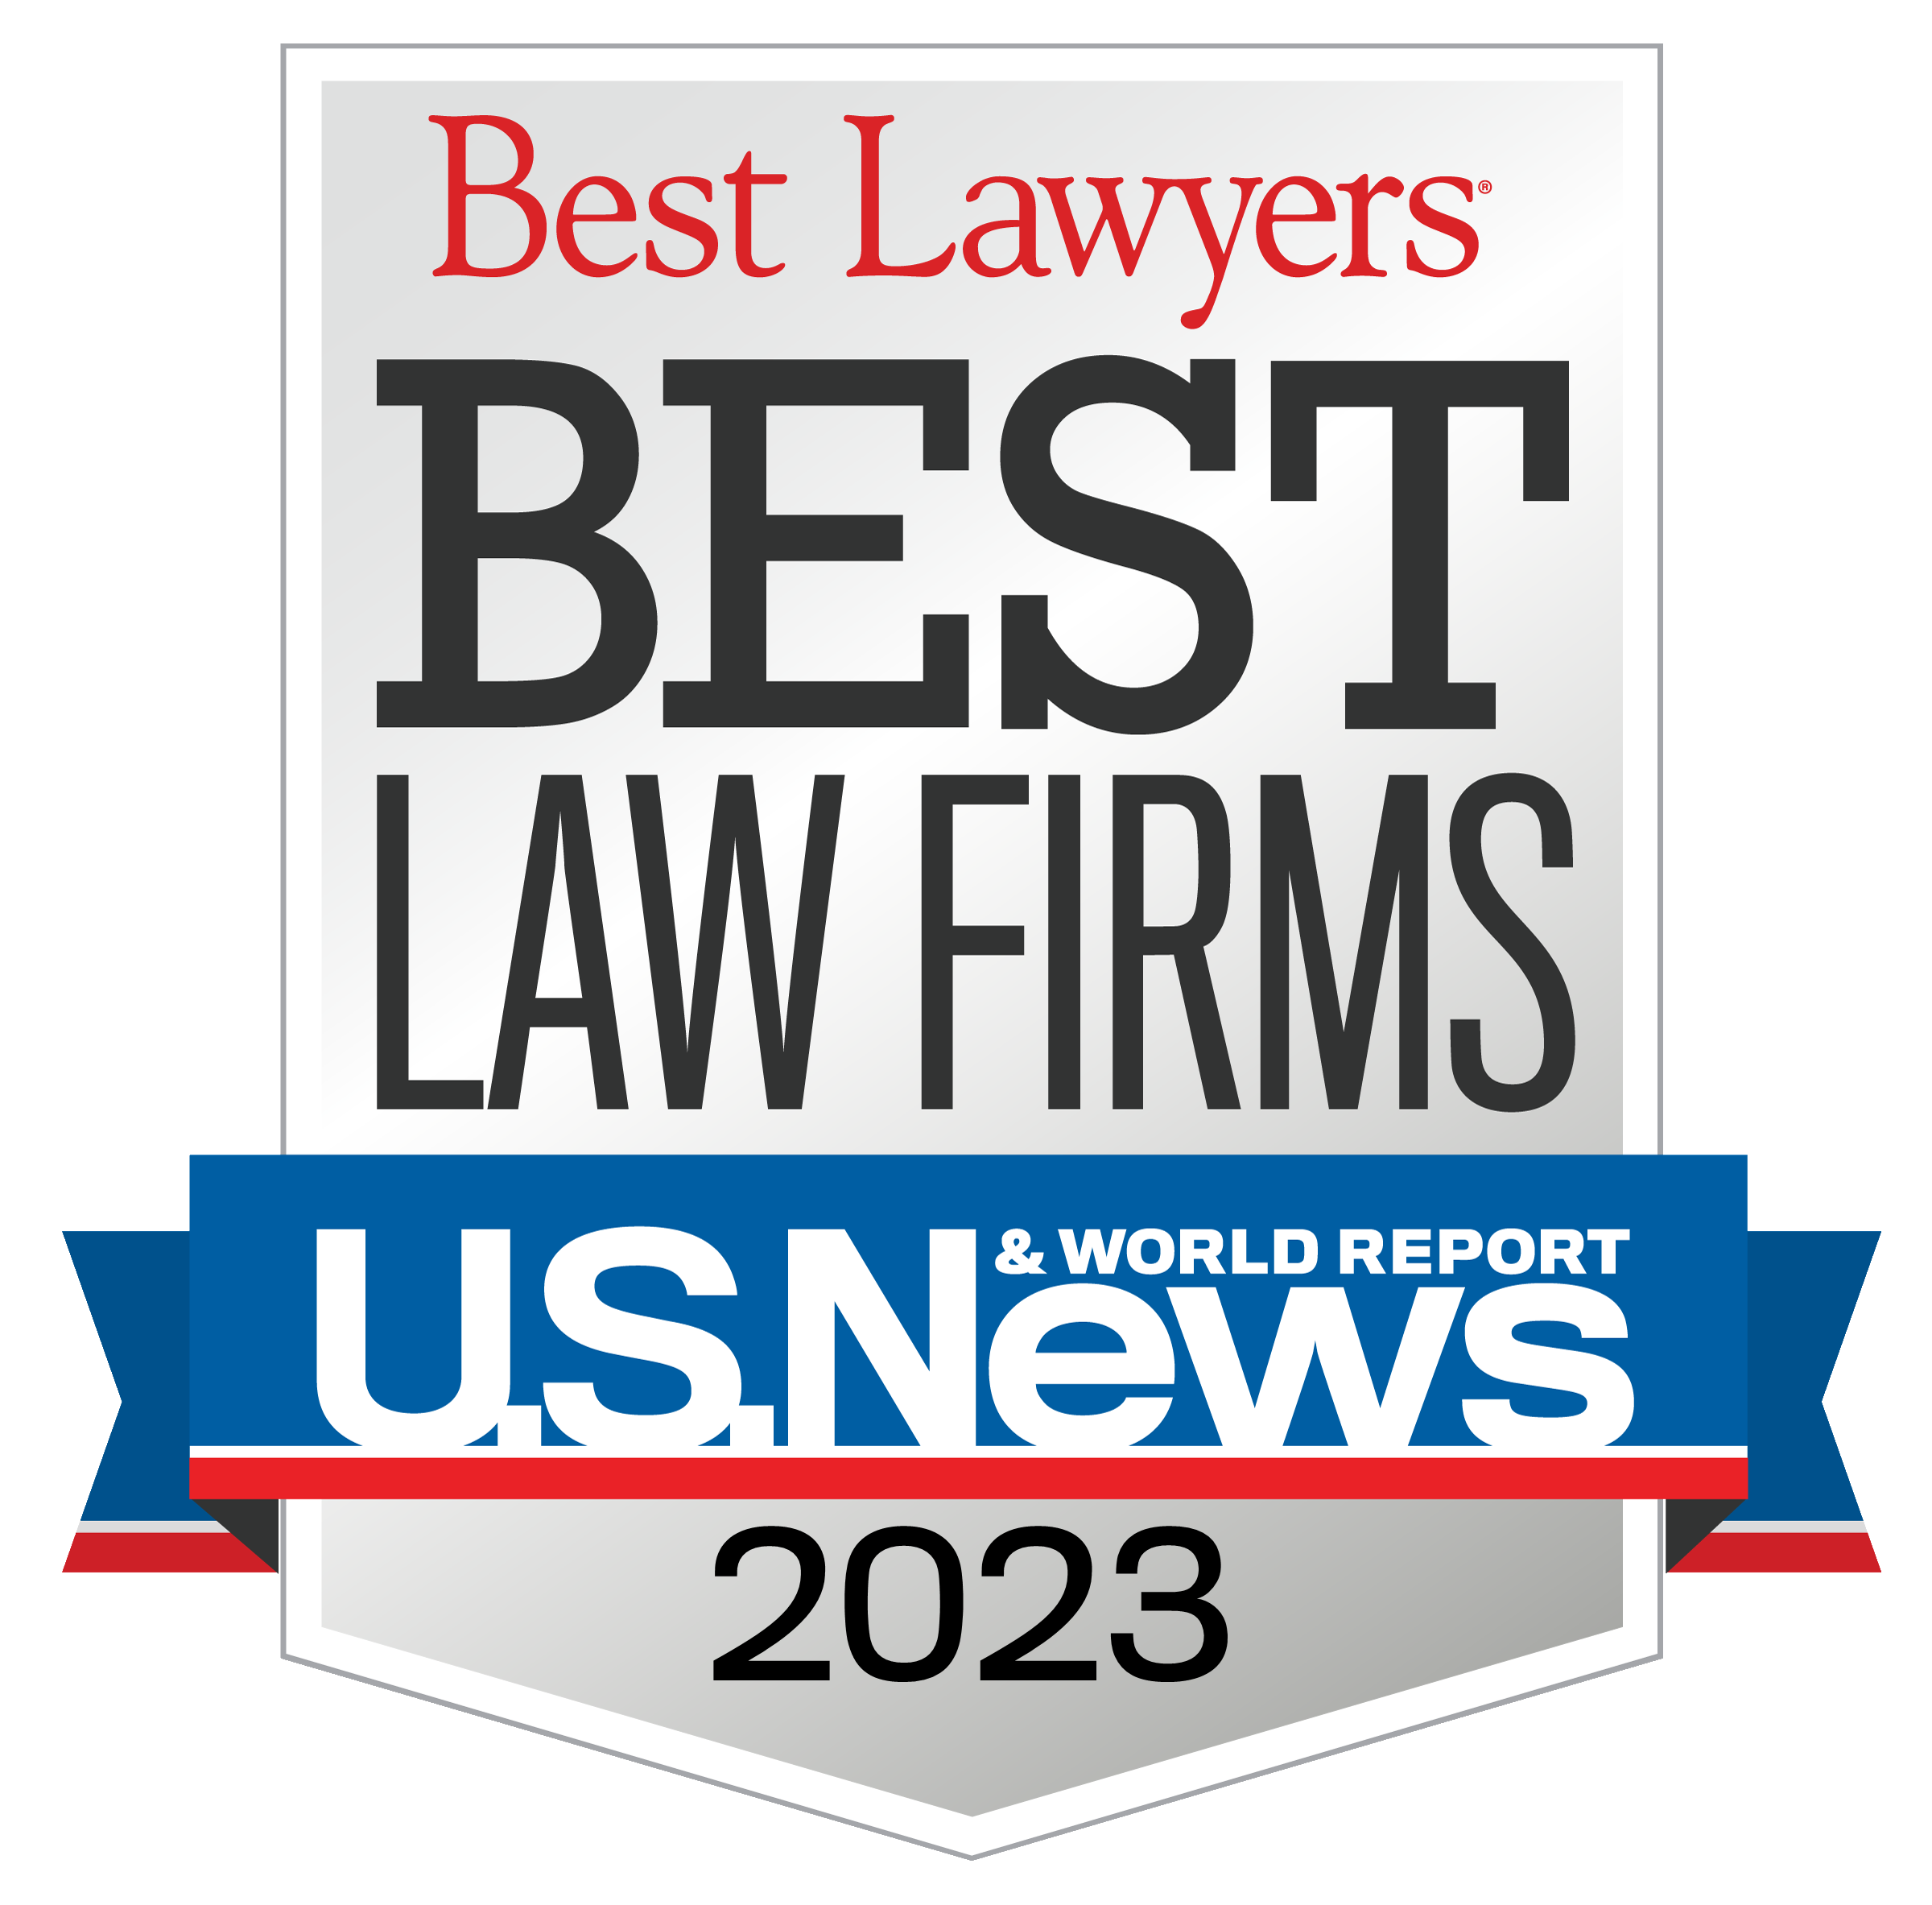 US News Best Lawyers Best Law Firms Award 2022